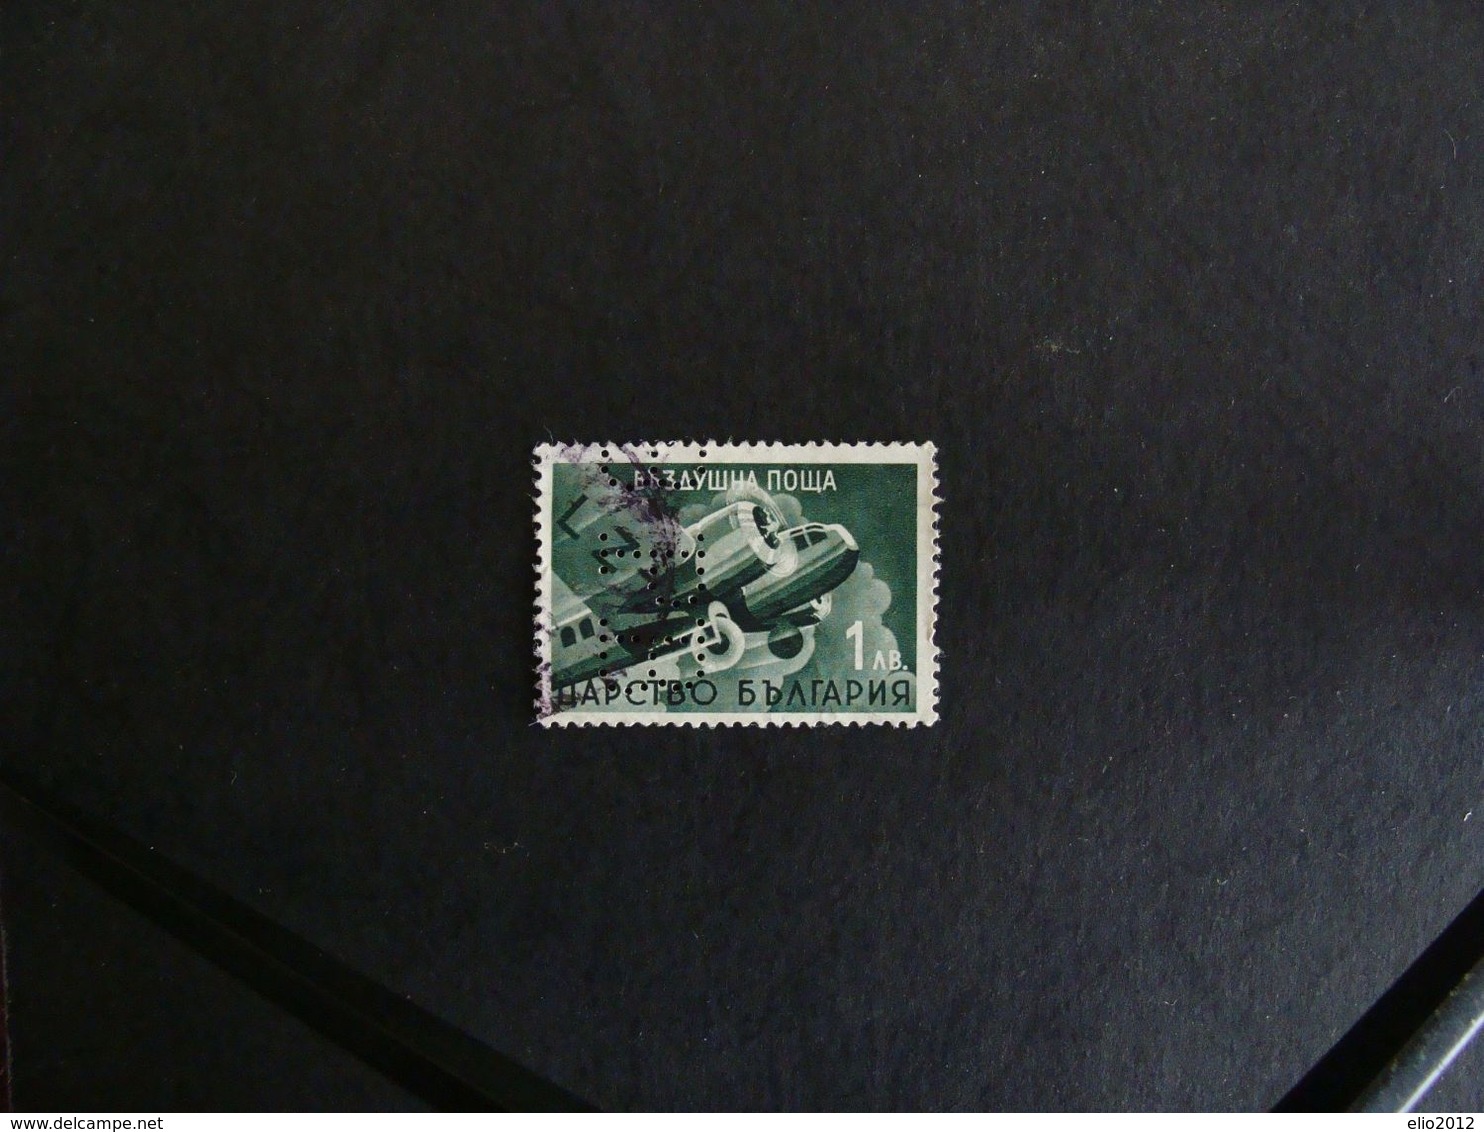 Perfin-BULGARIA Posta Aerea 1945-59 - Francobollo,Stamps-perforè,perfins,perforated - Usati